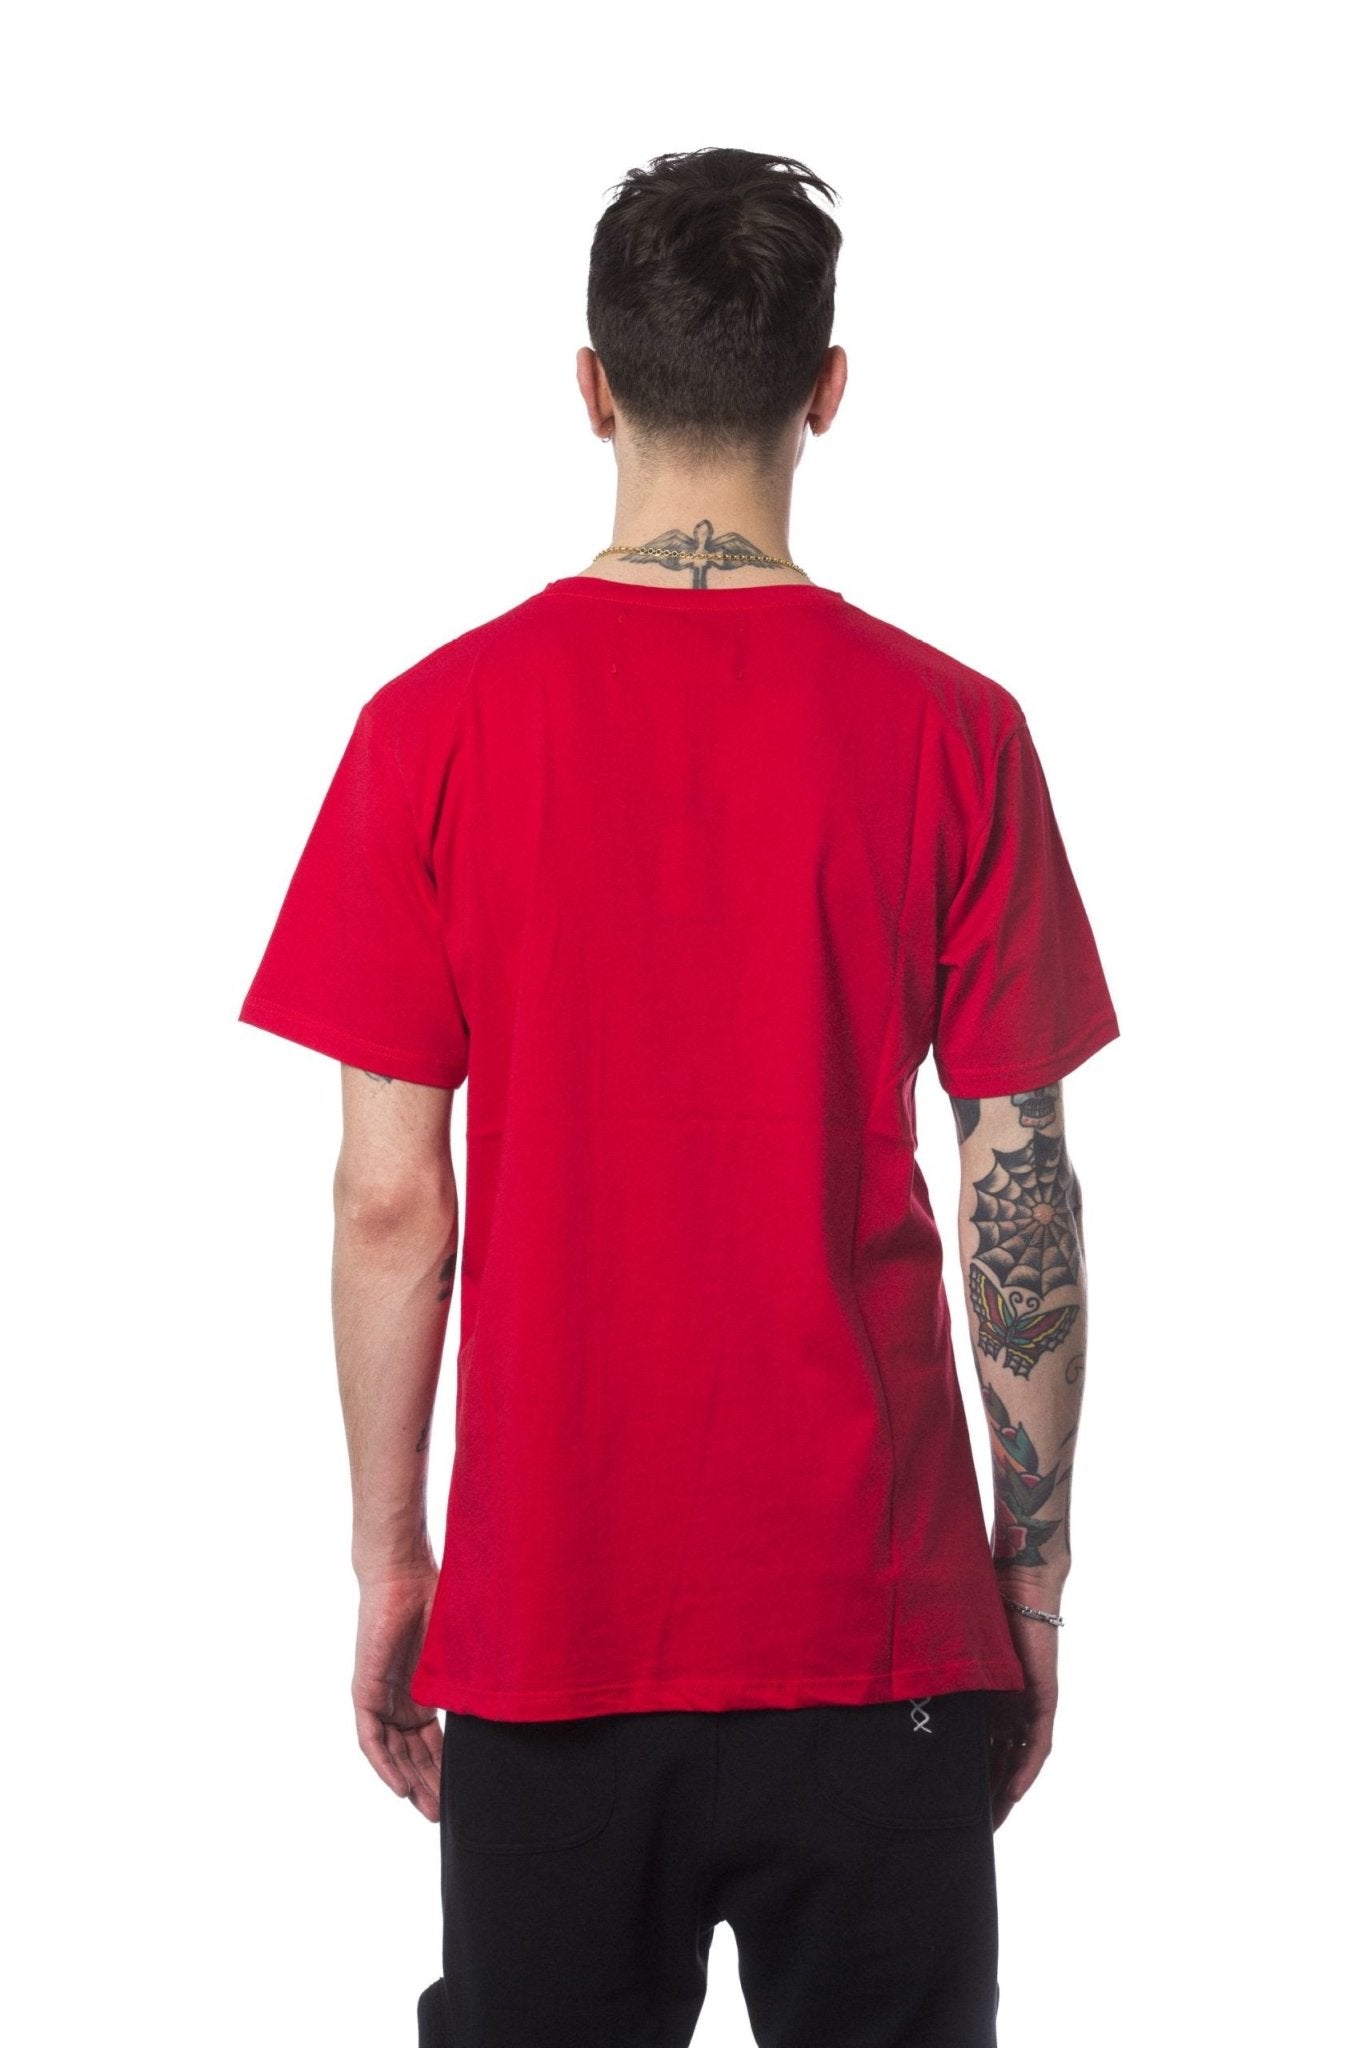 Nicolo Tonetto Red Cotton T-Shirt - Fizigo